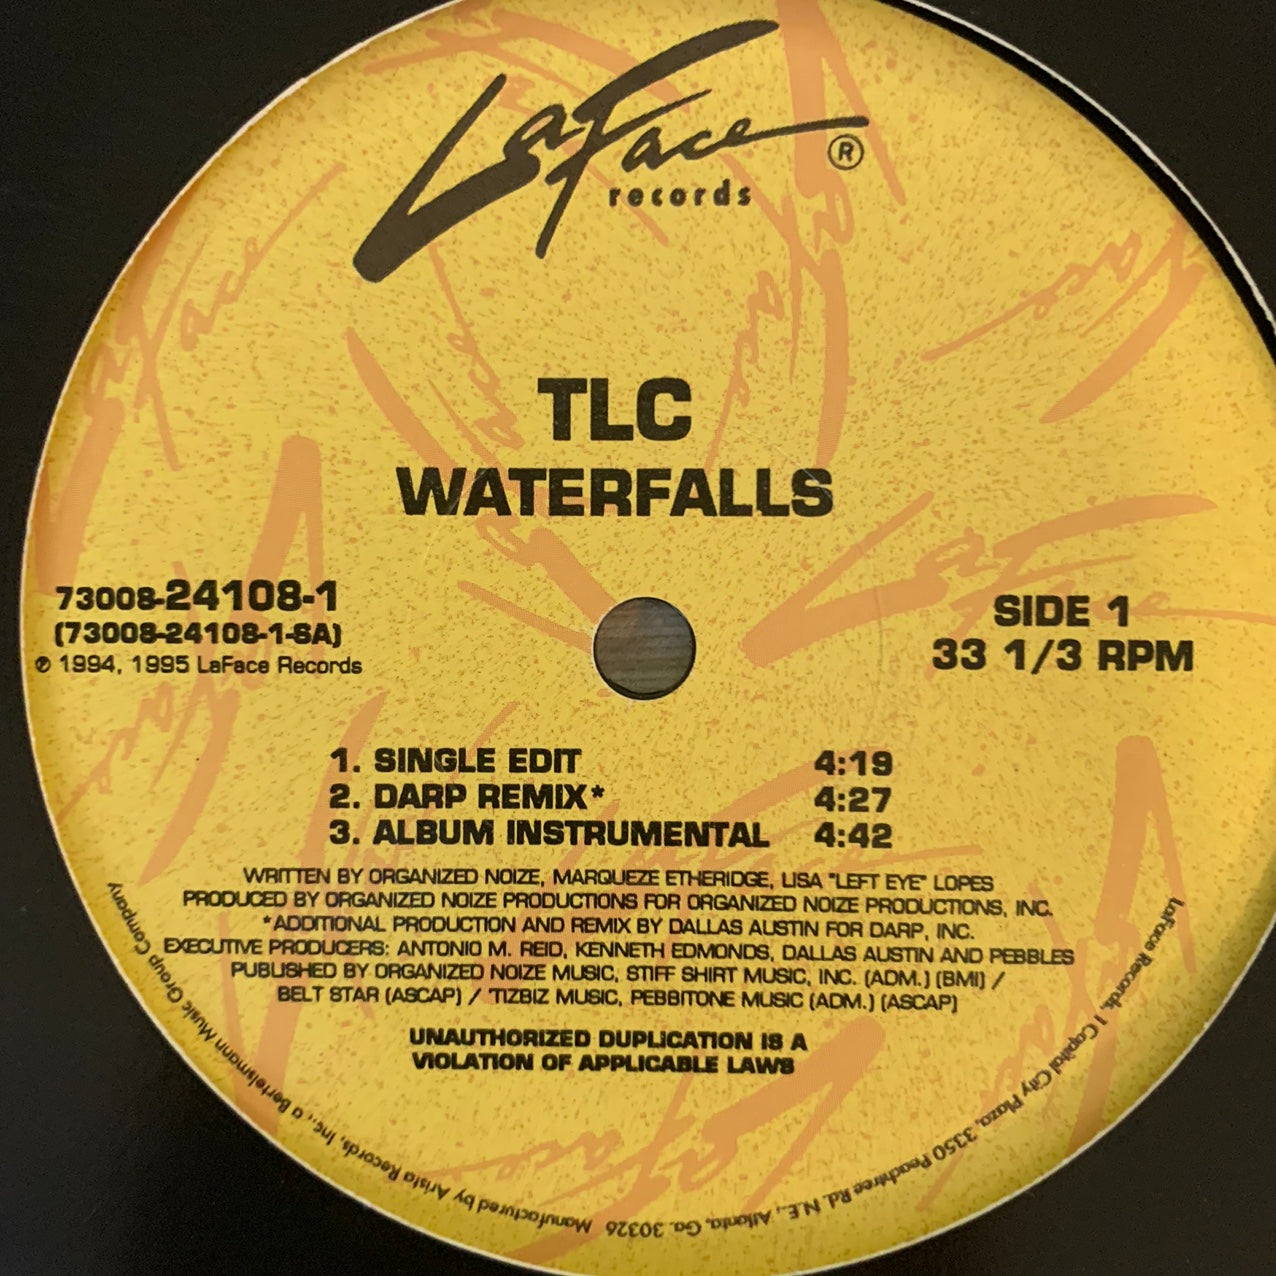 TLC “Waterfalls” 6 version 12inch Vinyl